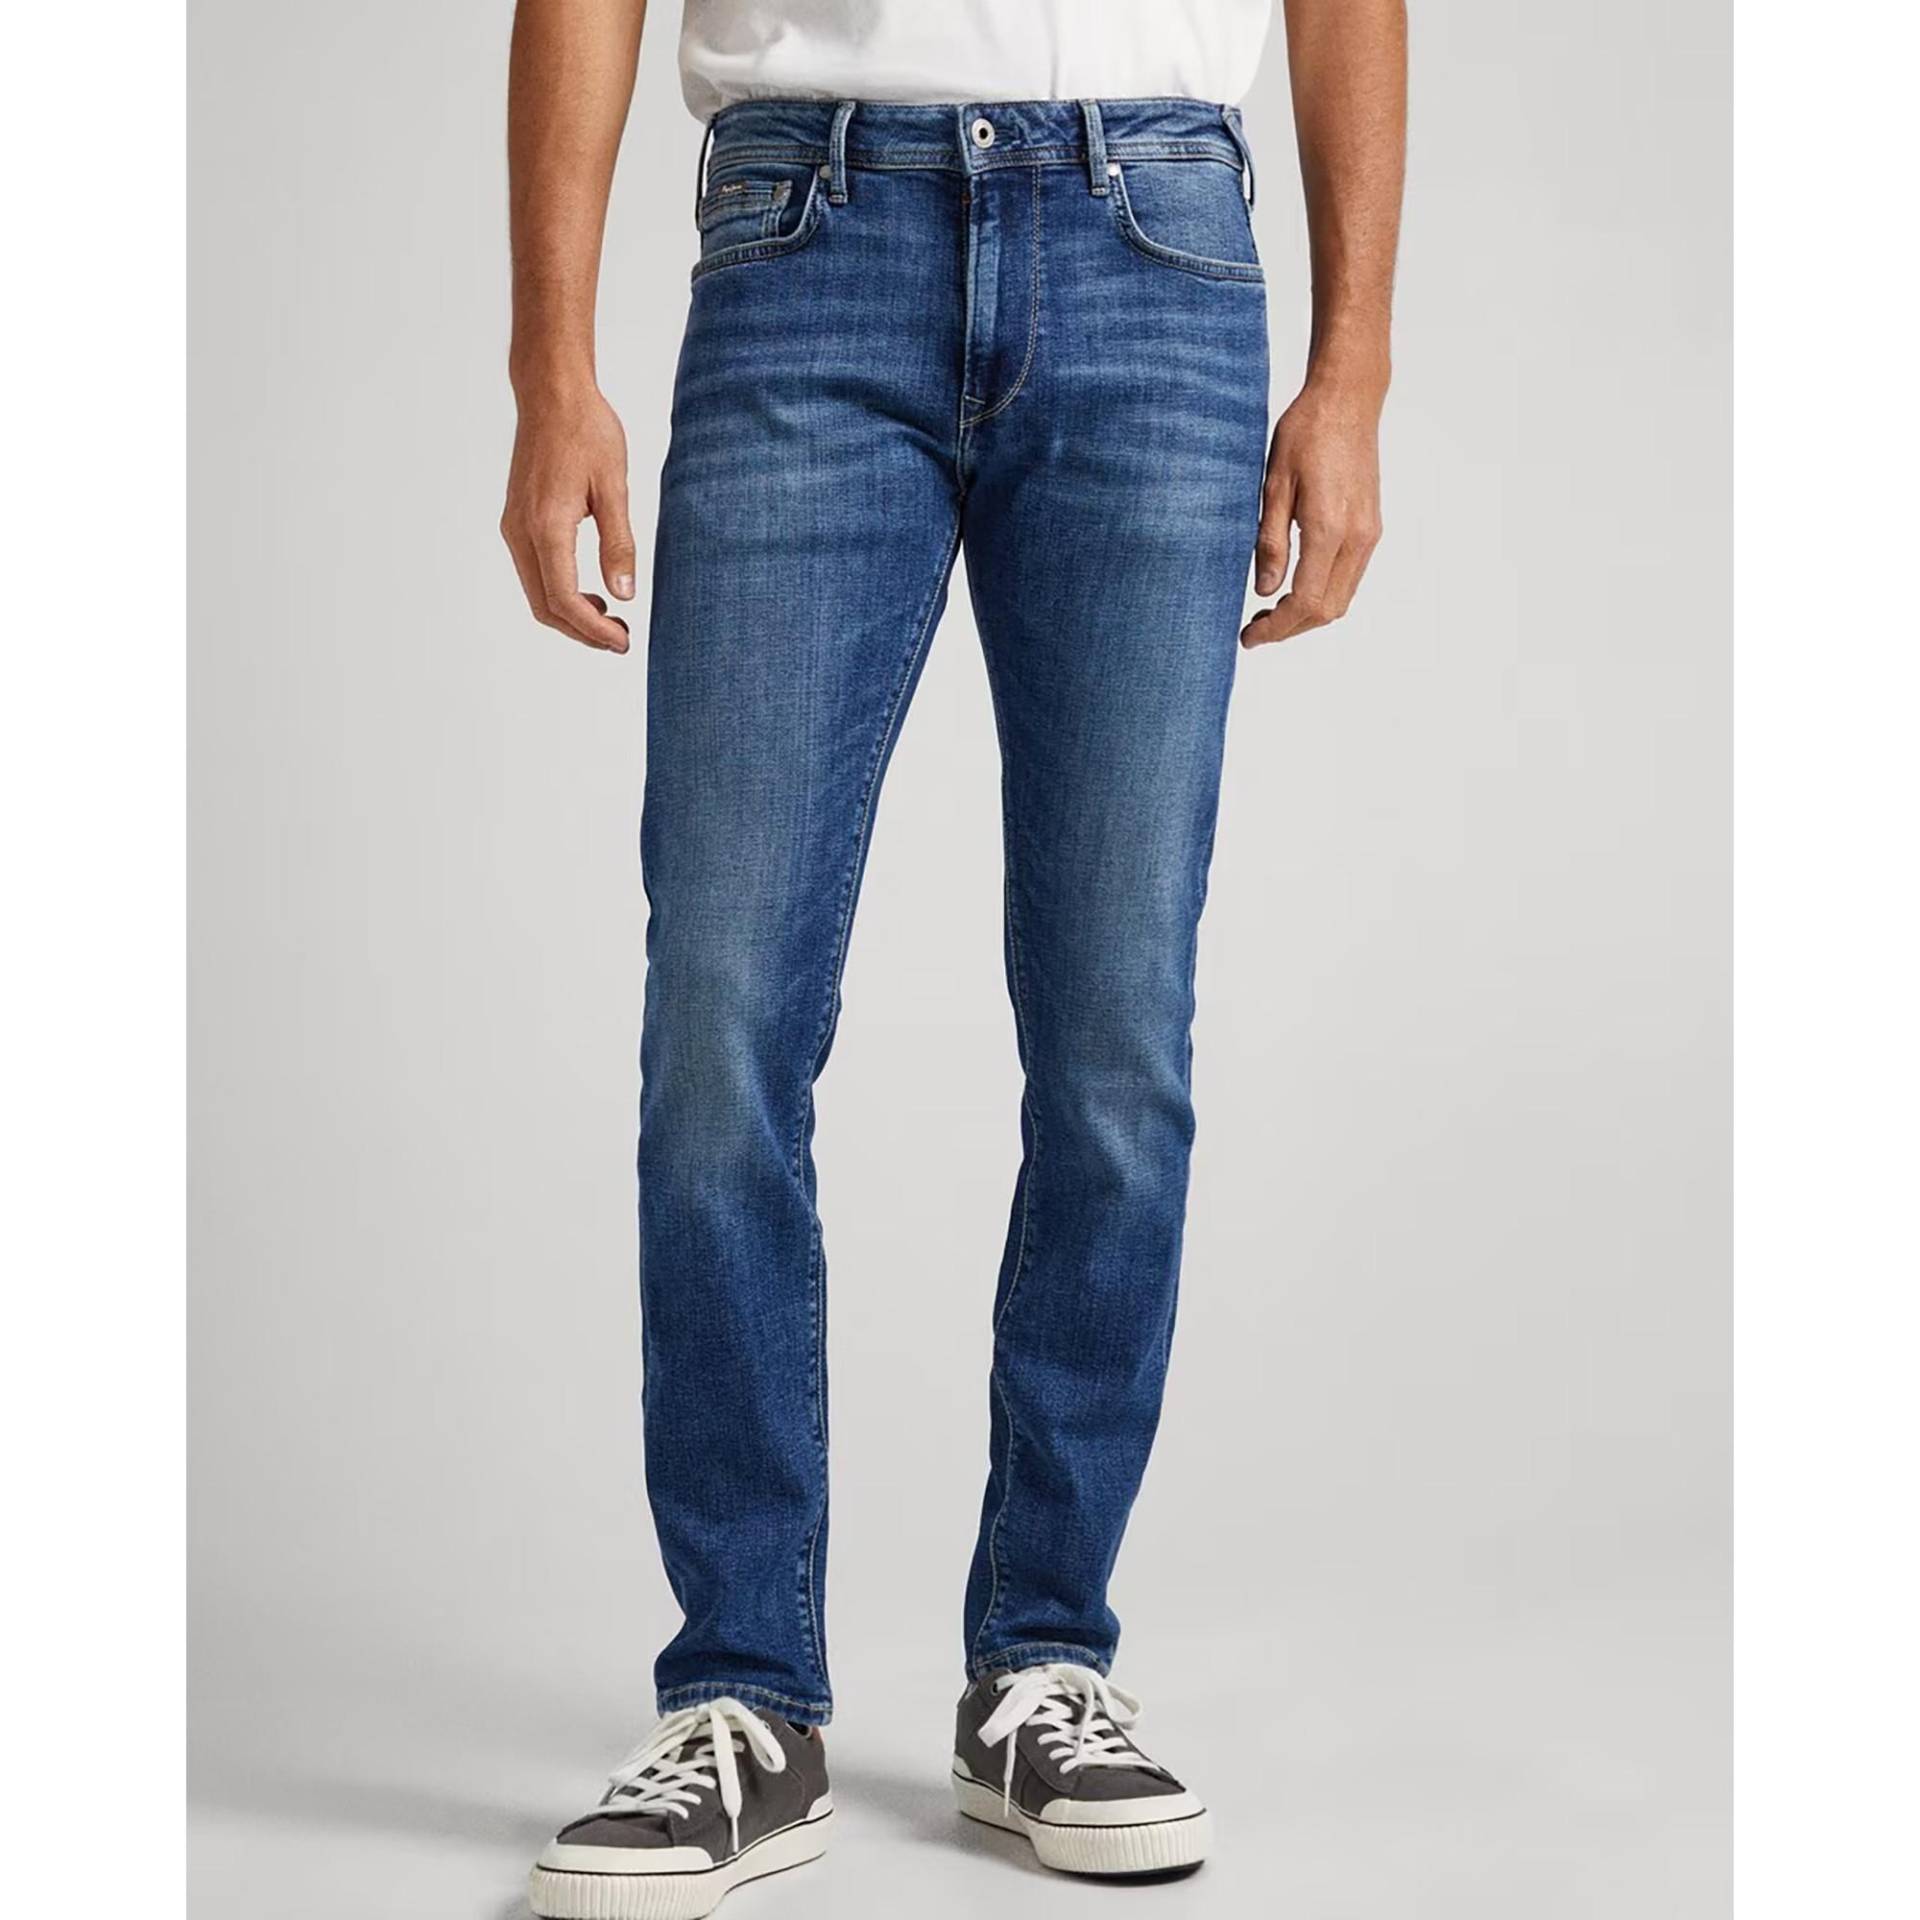 Jeans, Slim Fit Herren Blau  L34/W34 von Pepe Jeans